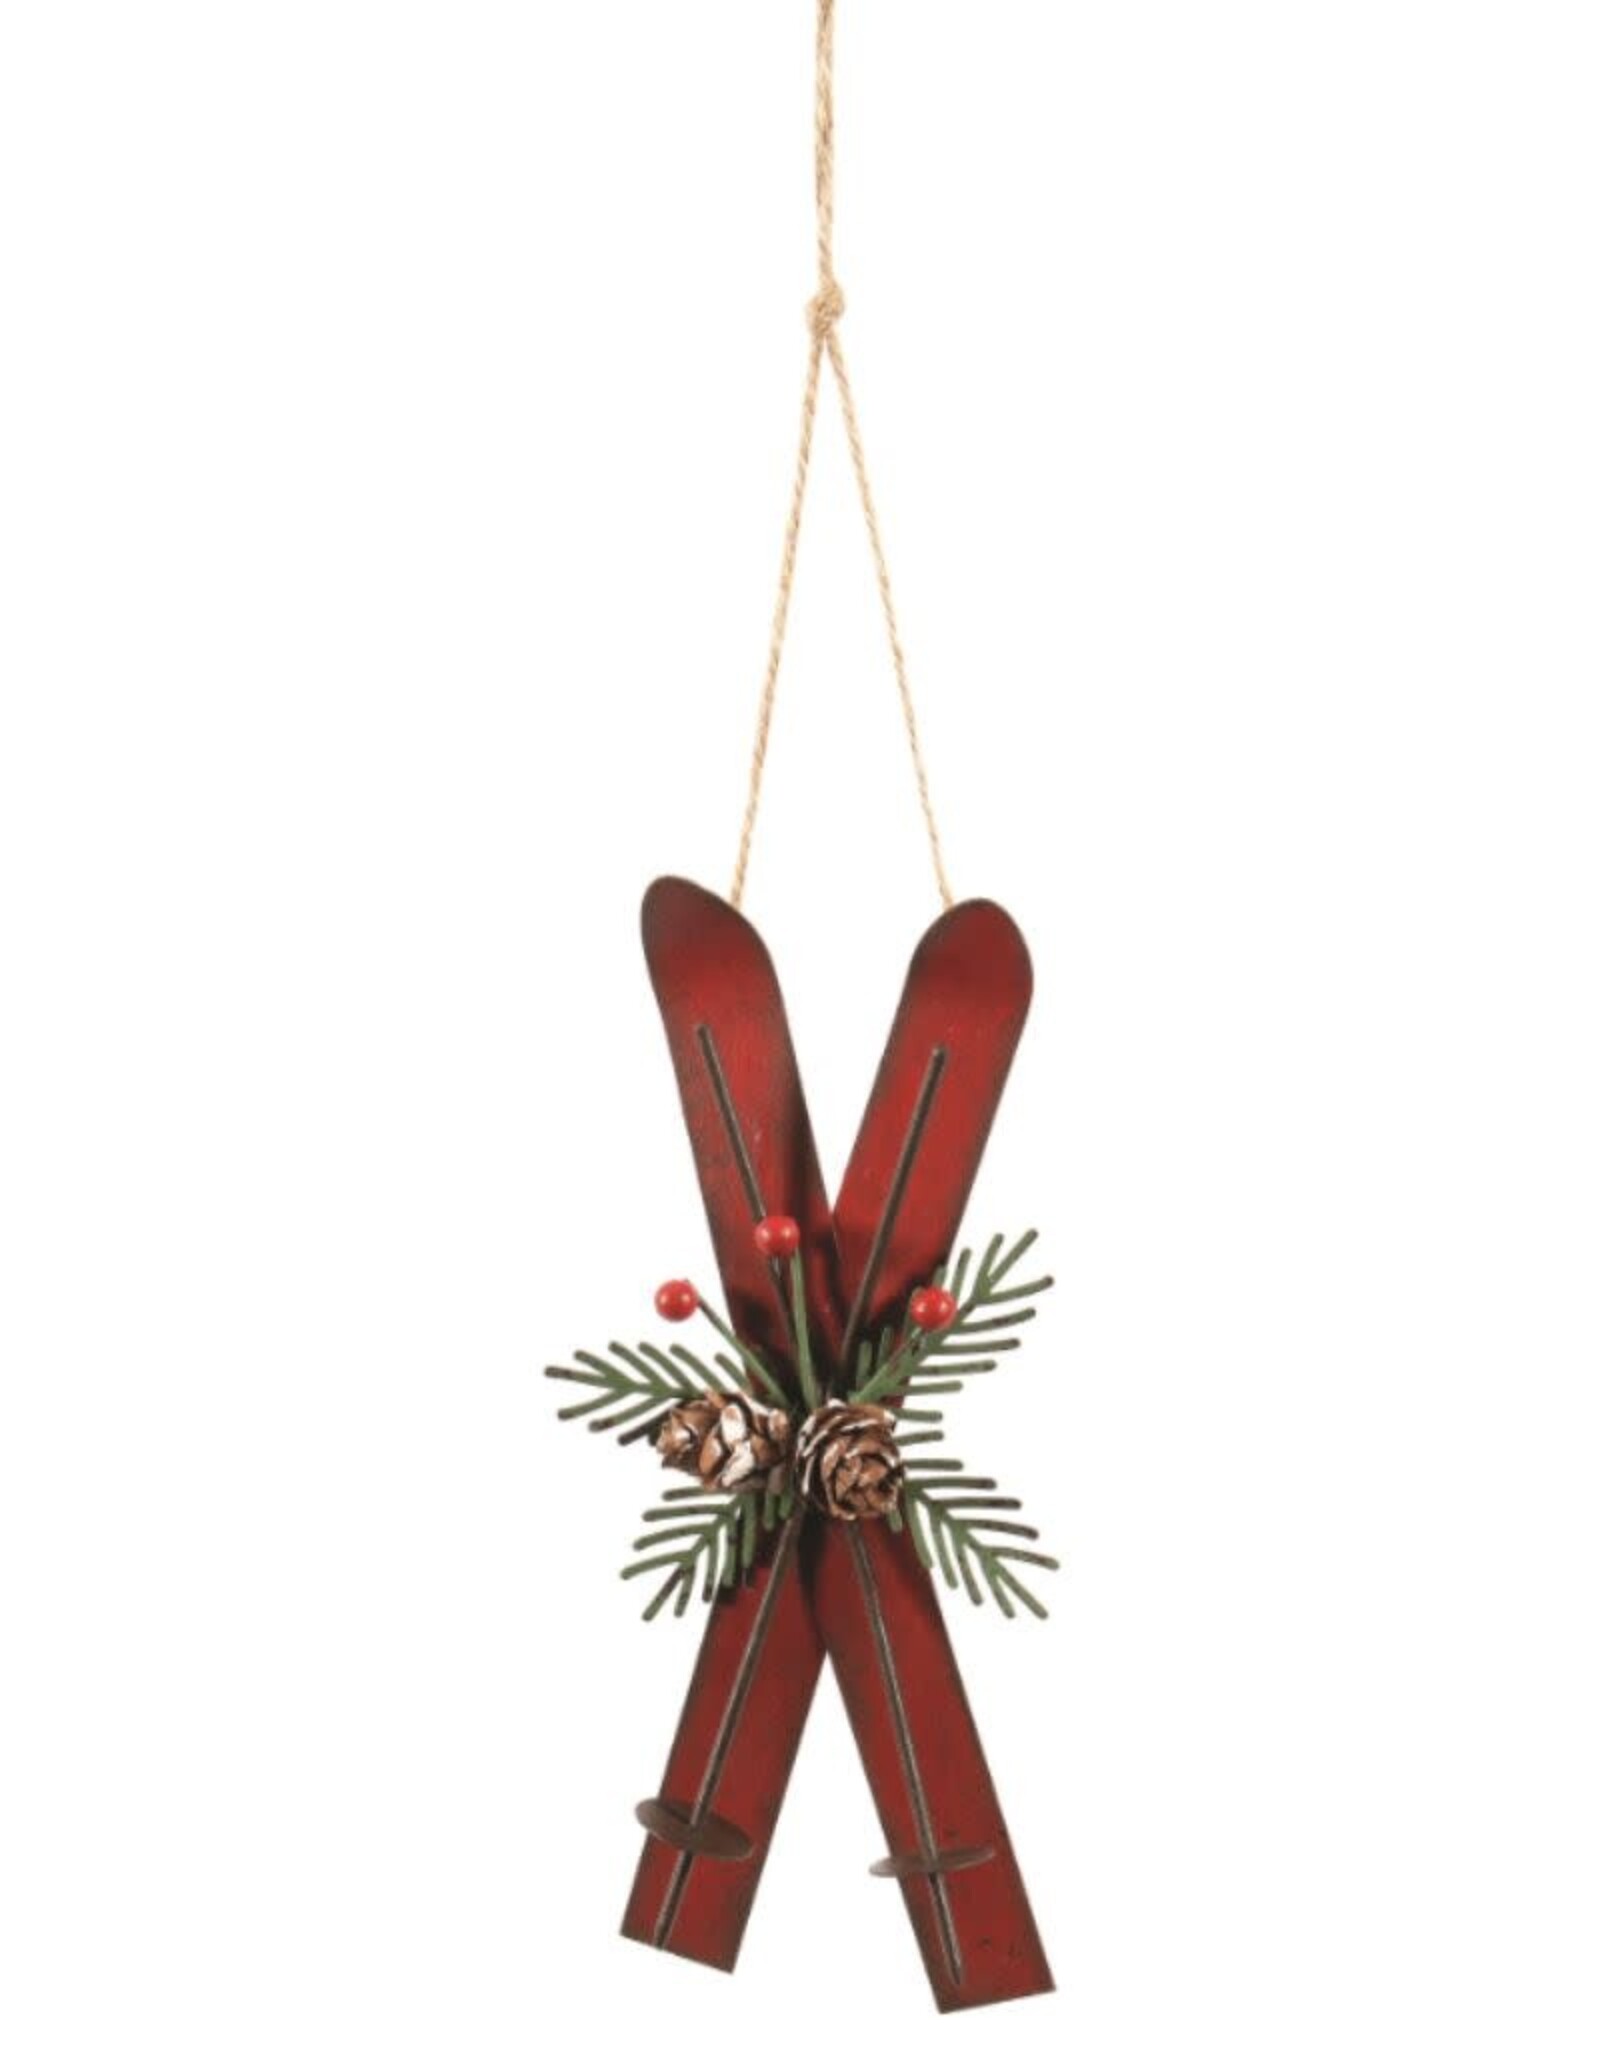 Nutcracker Designs CDYN25043 Red Metal Skis Ornament, 7"L